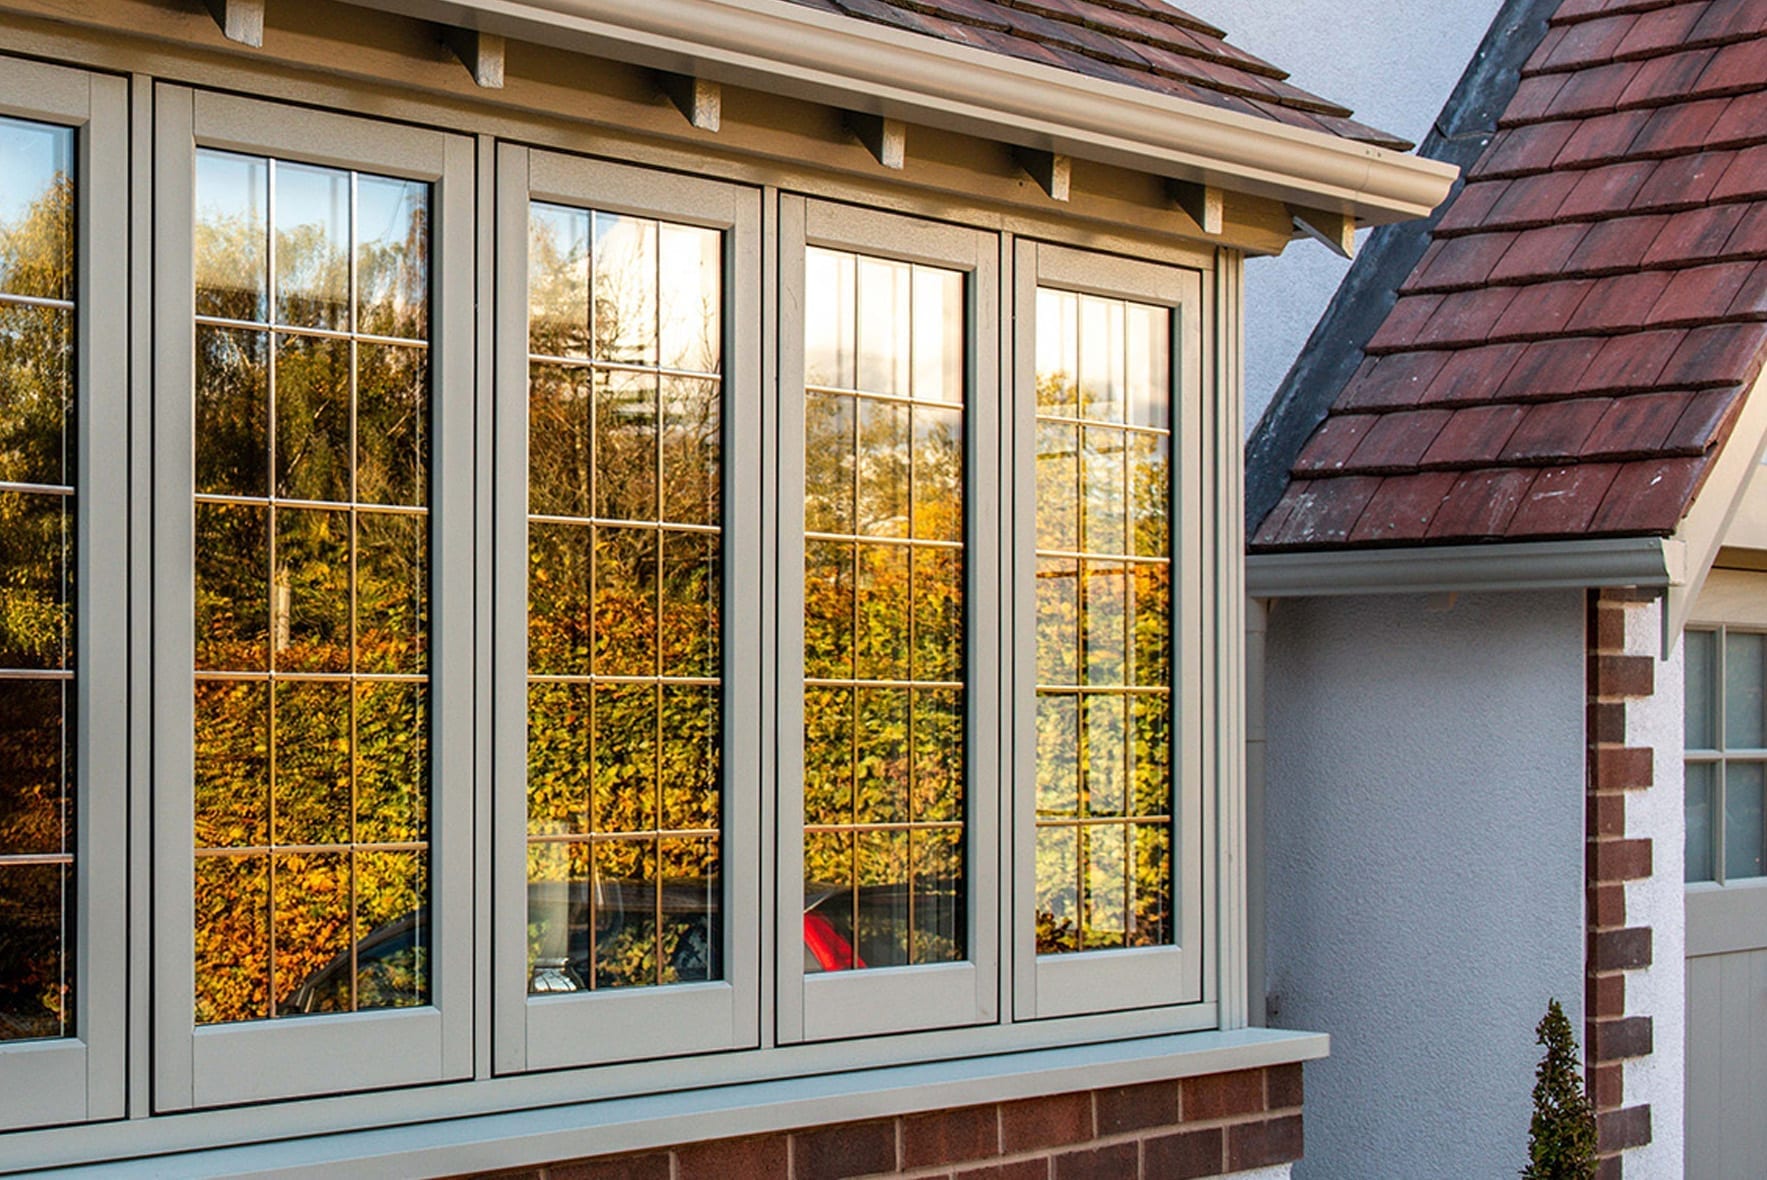 new-window-planning-permission-cottage-renovation-1